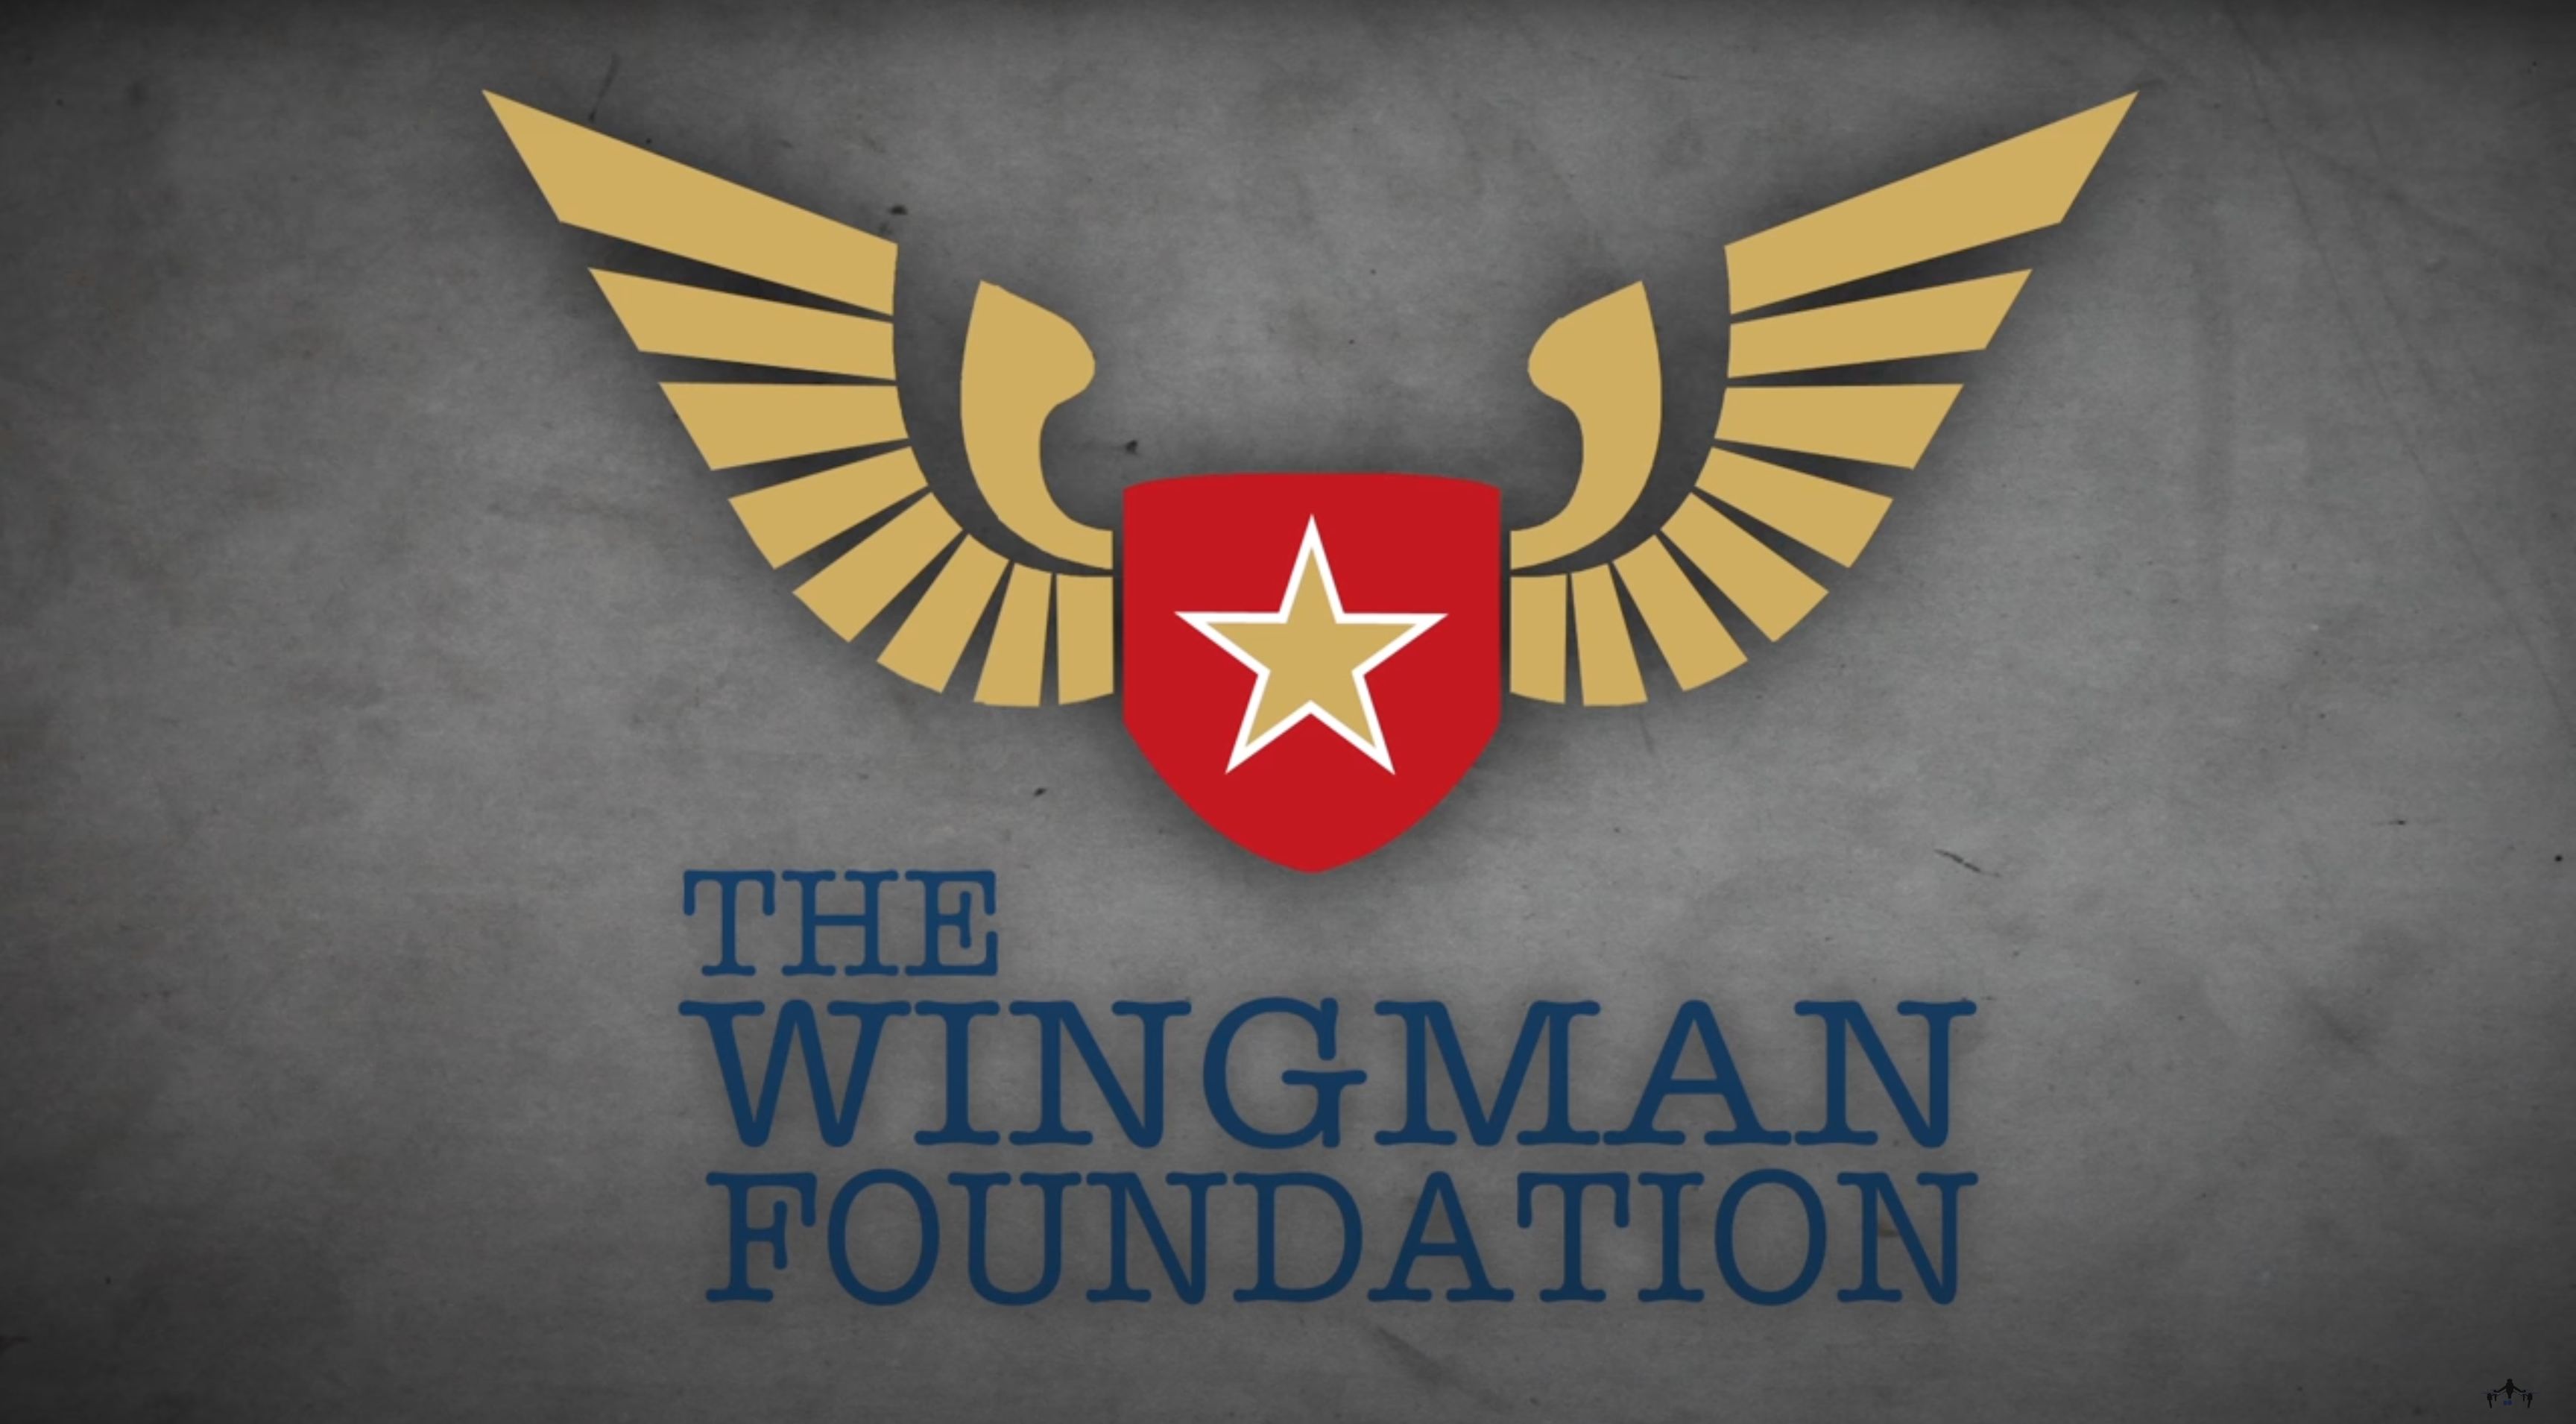 Load video: Wingman Foundation Promo Video